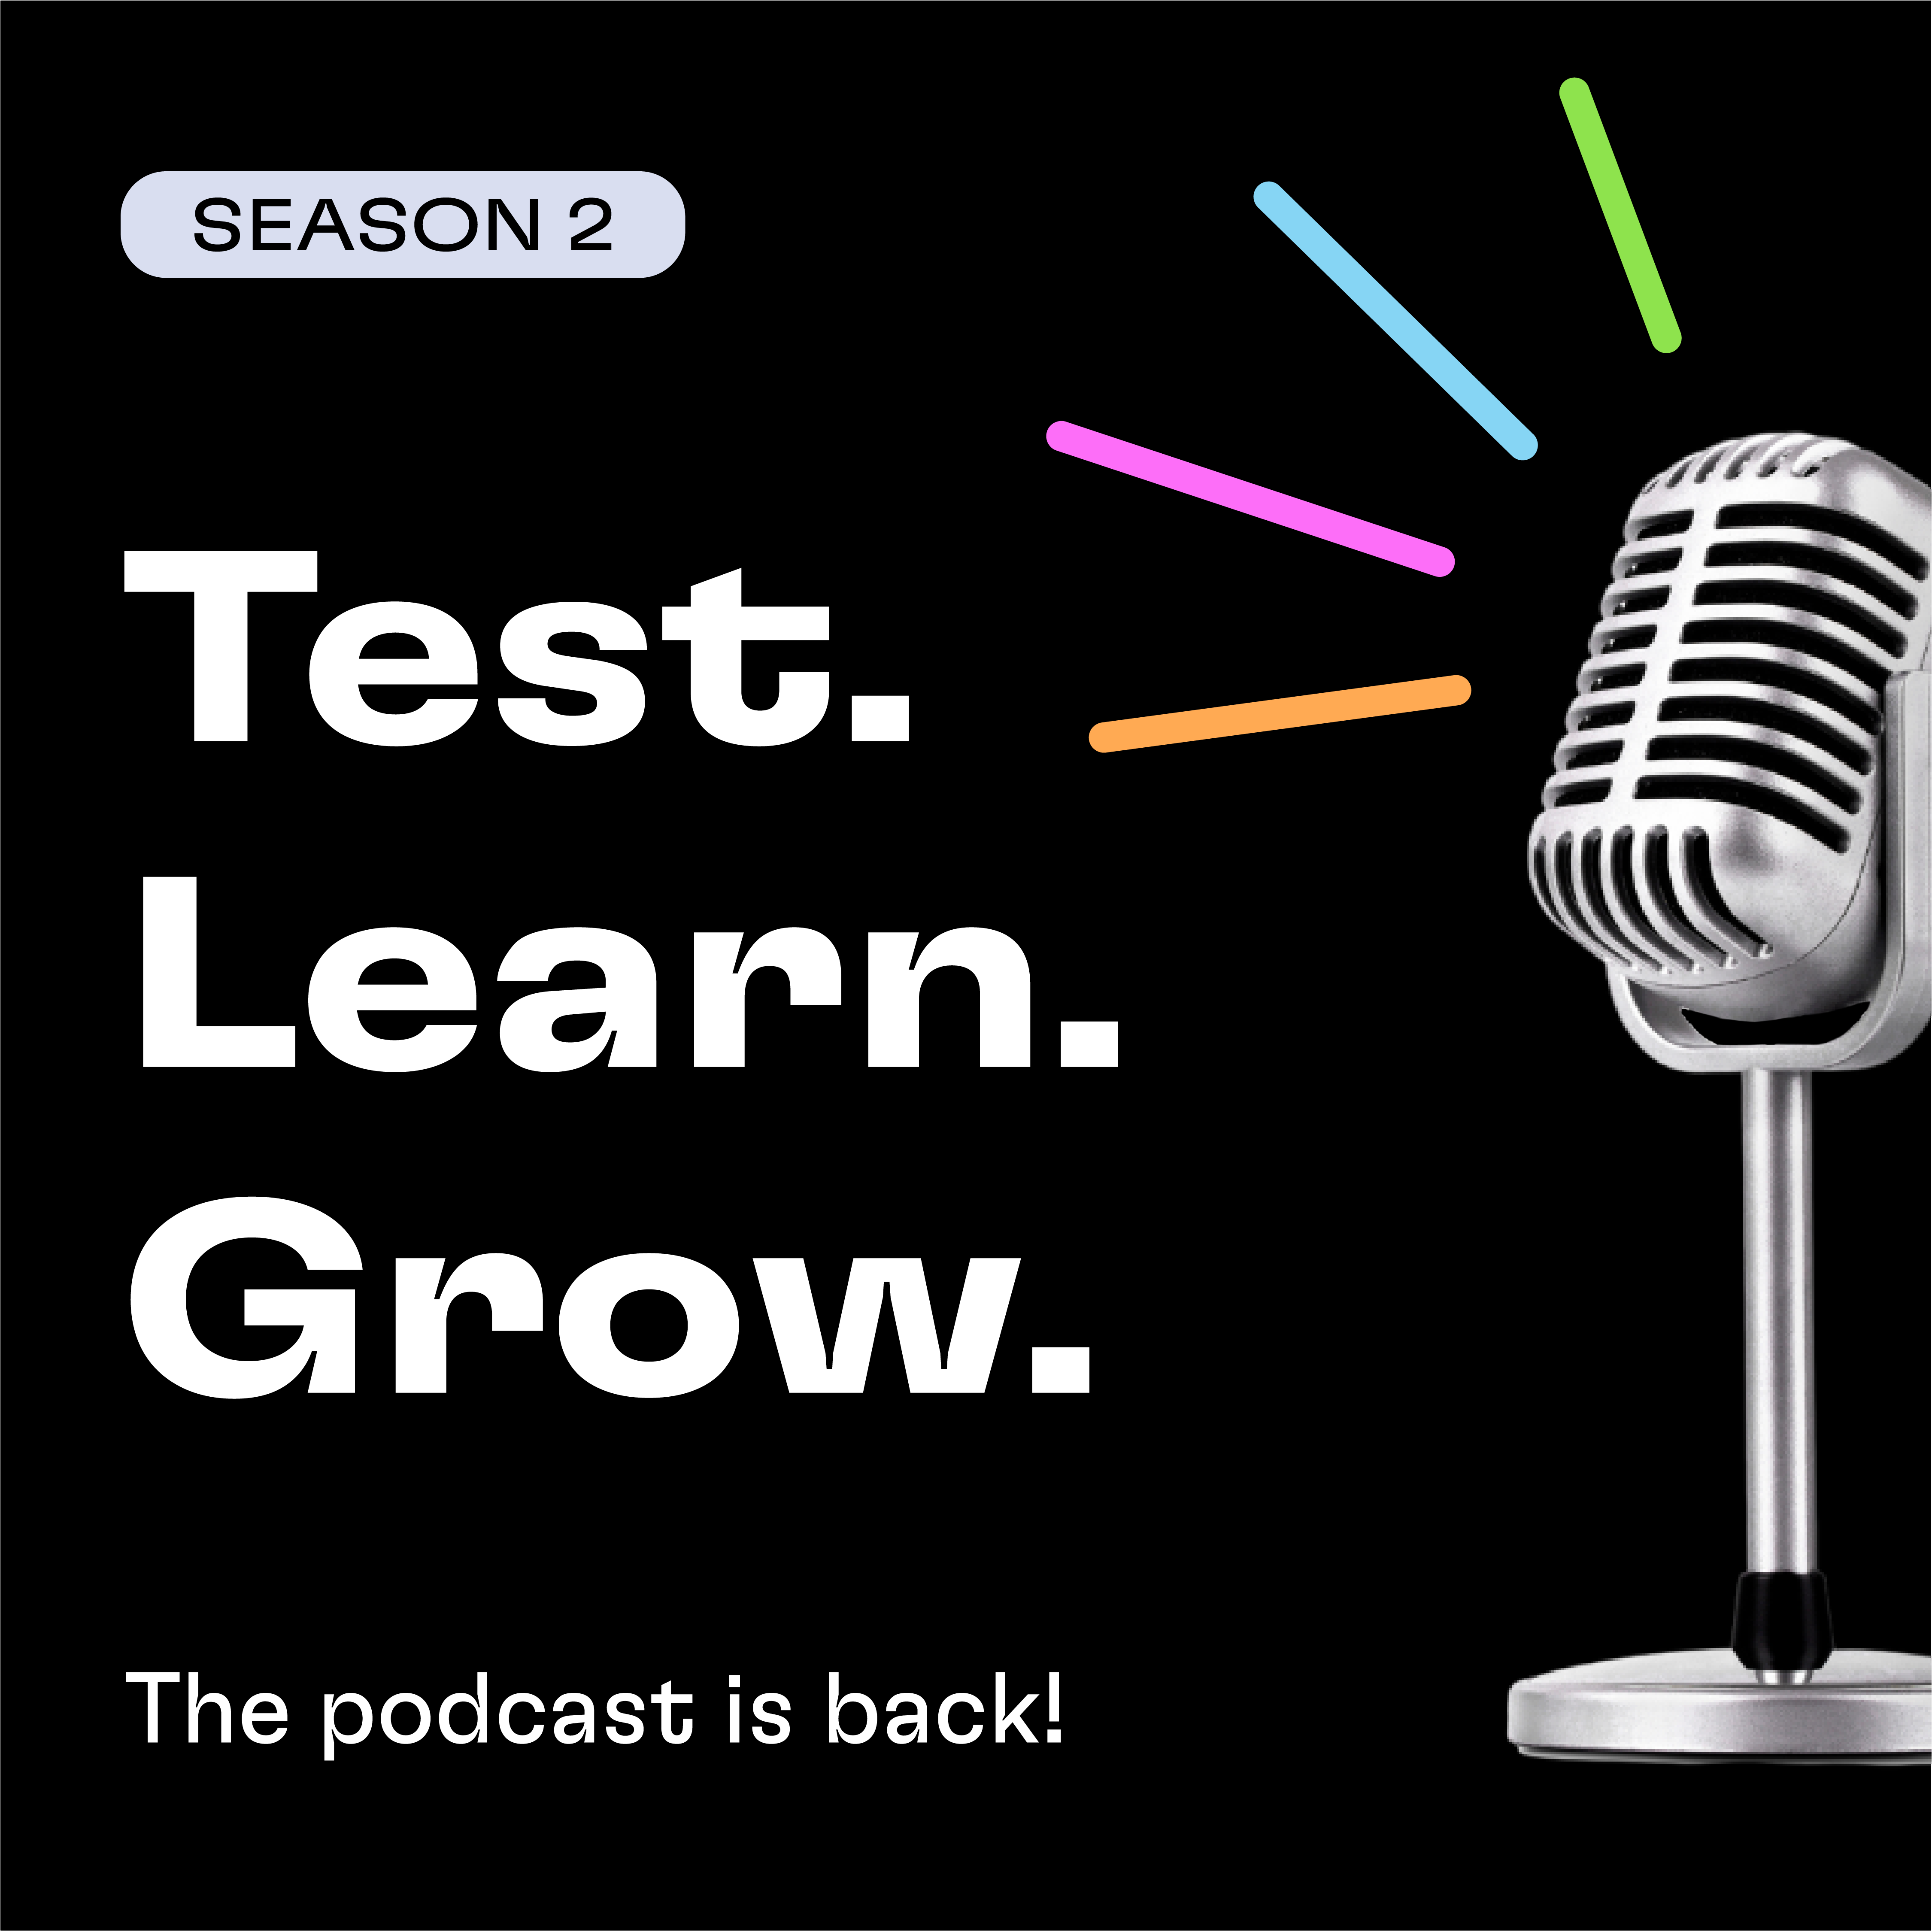 Test. Learn. Grow. Season 2 - The podcast is back!